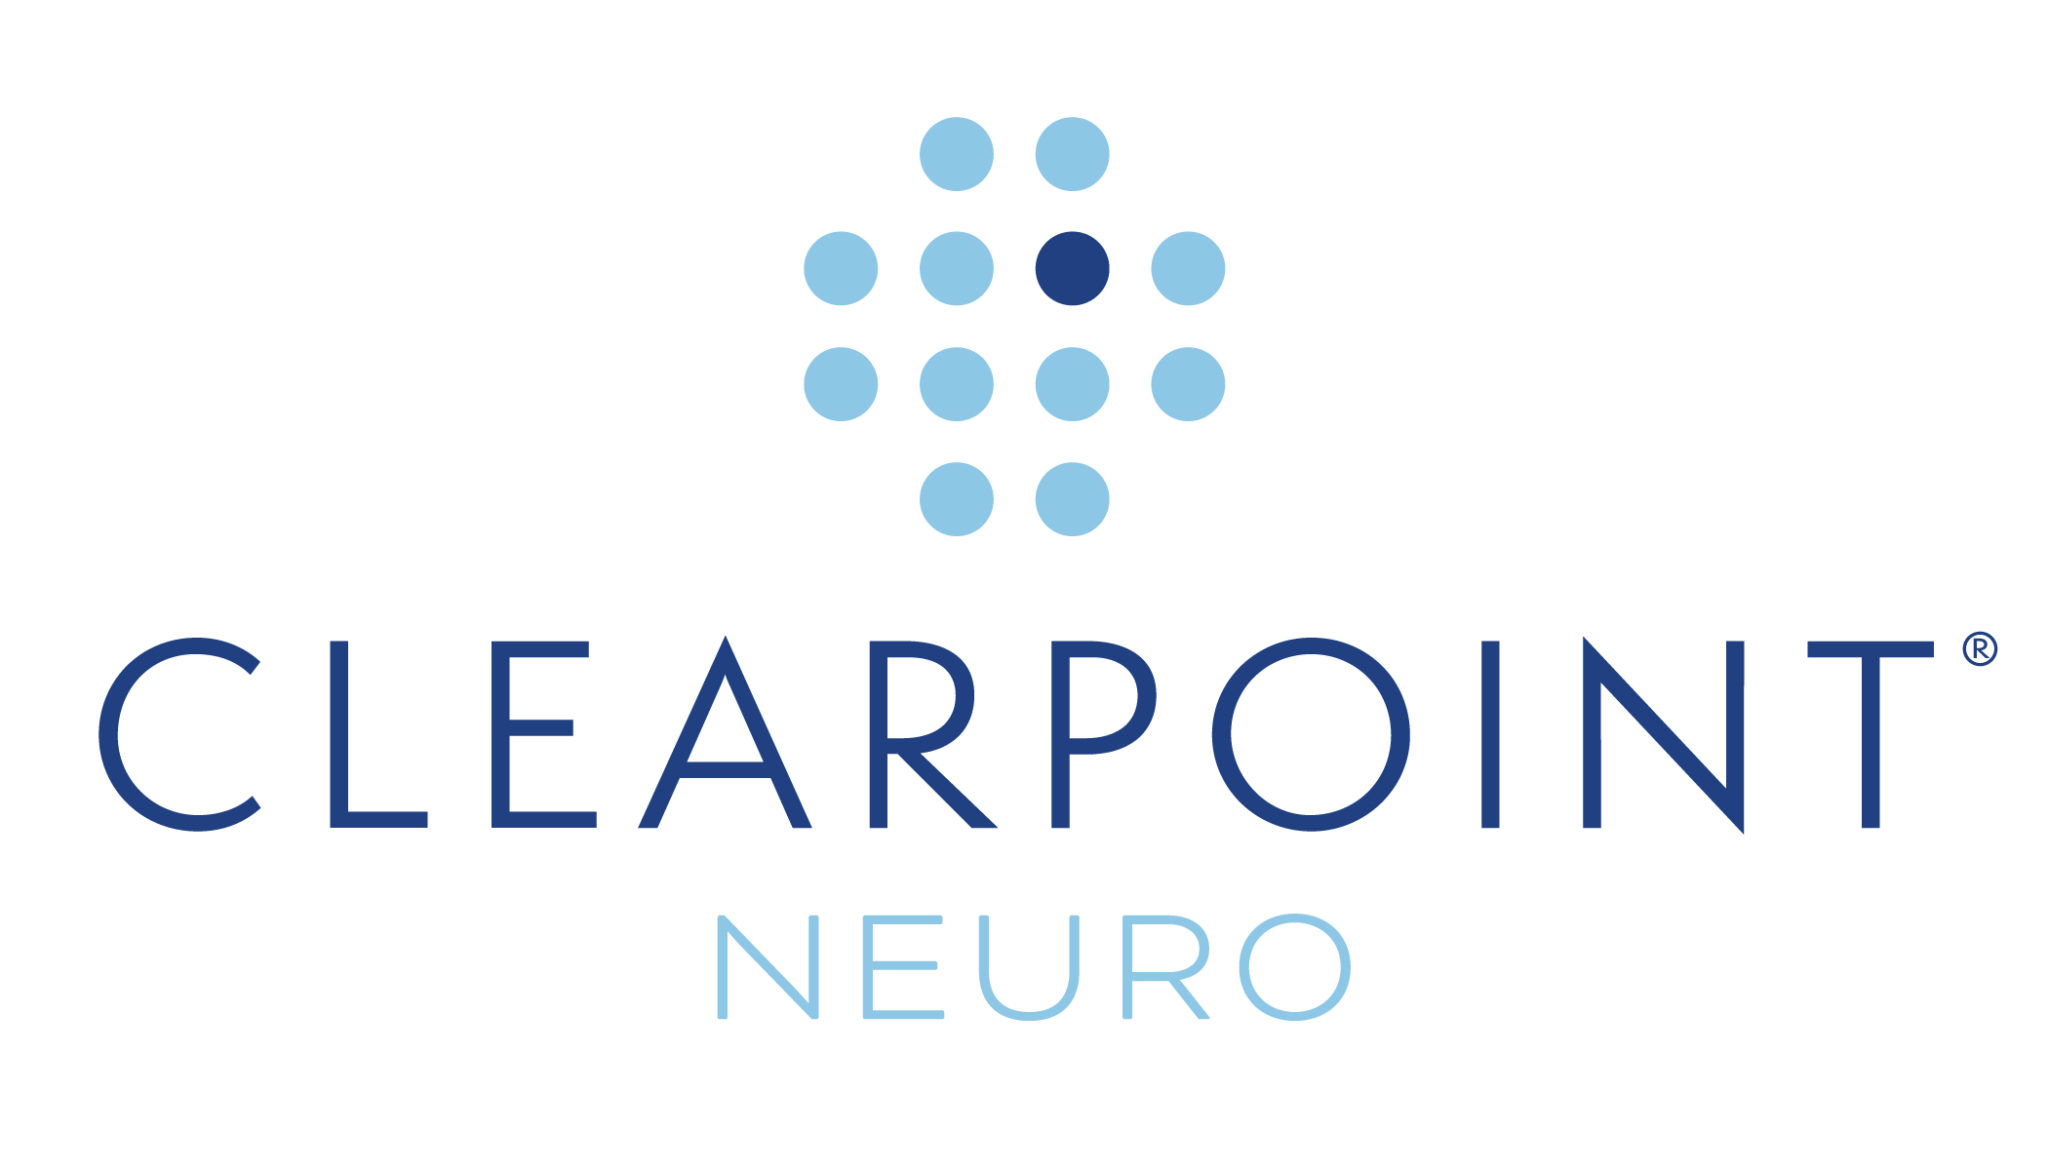 Clearpoint Neuro